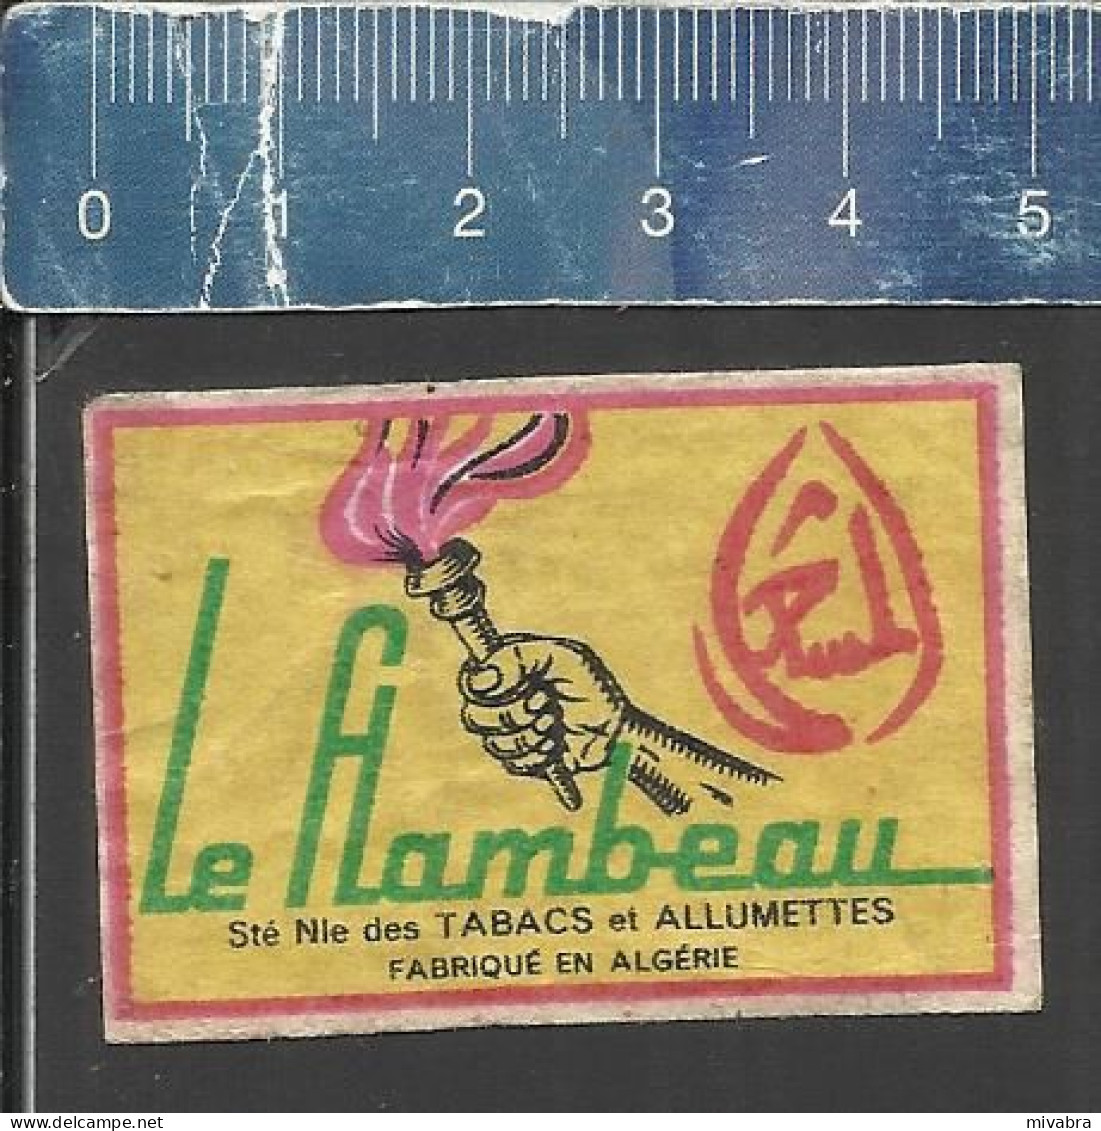 LE FLAMBEAU ( TORCH FAKKEL ) - OLD MATCHBOX LABEL ALGERIA - Scatole Di Fiammiferi - Etichette